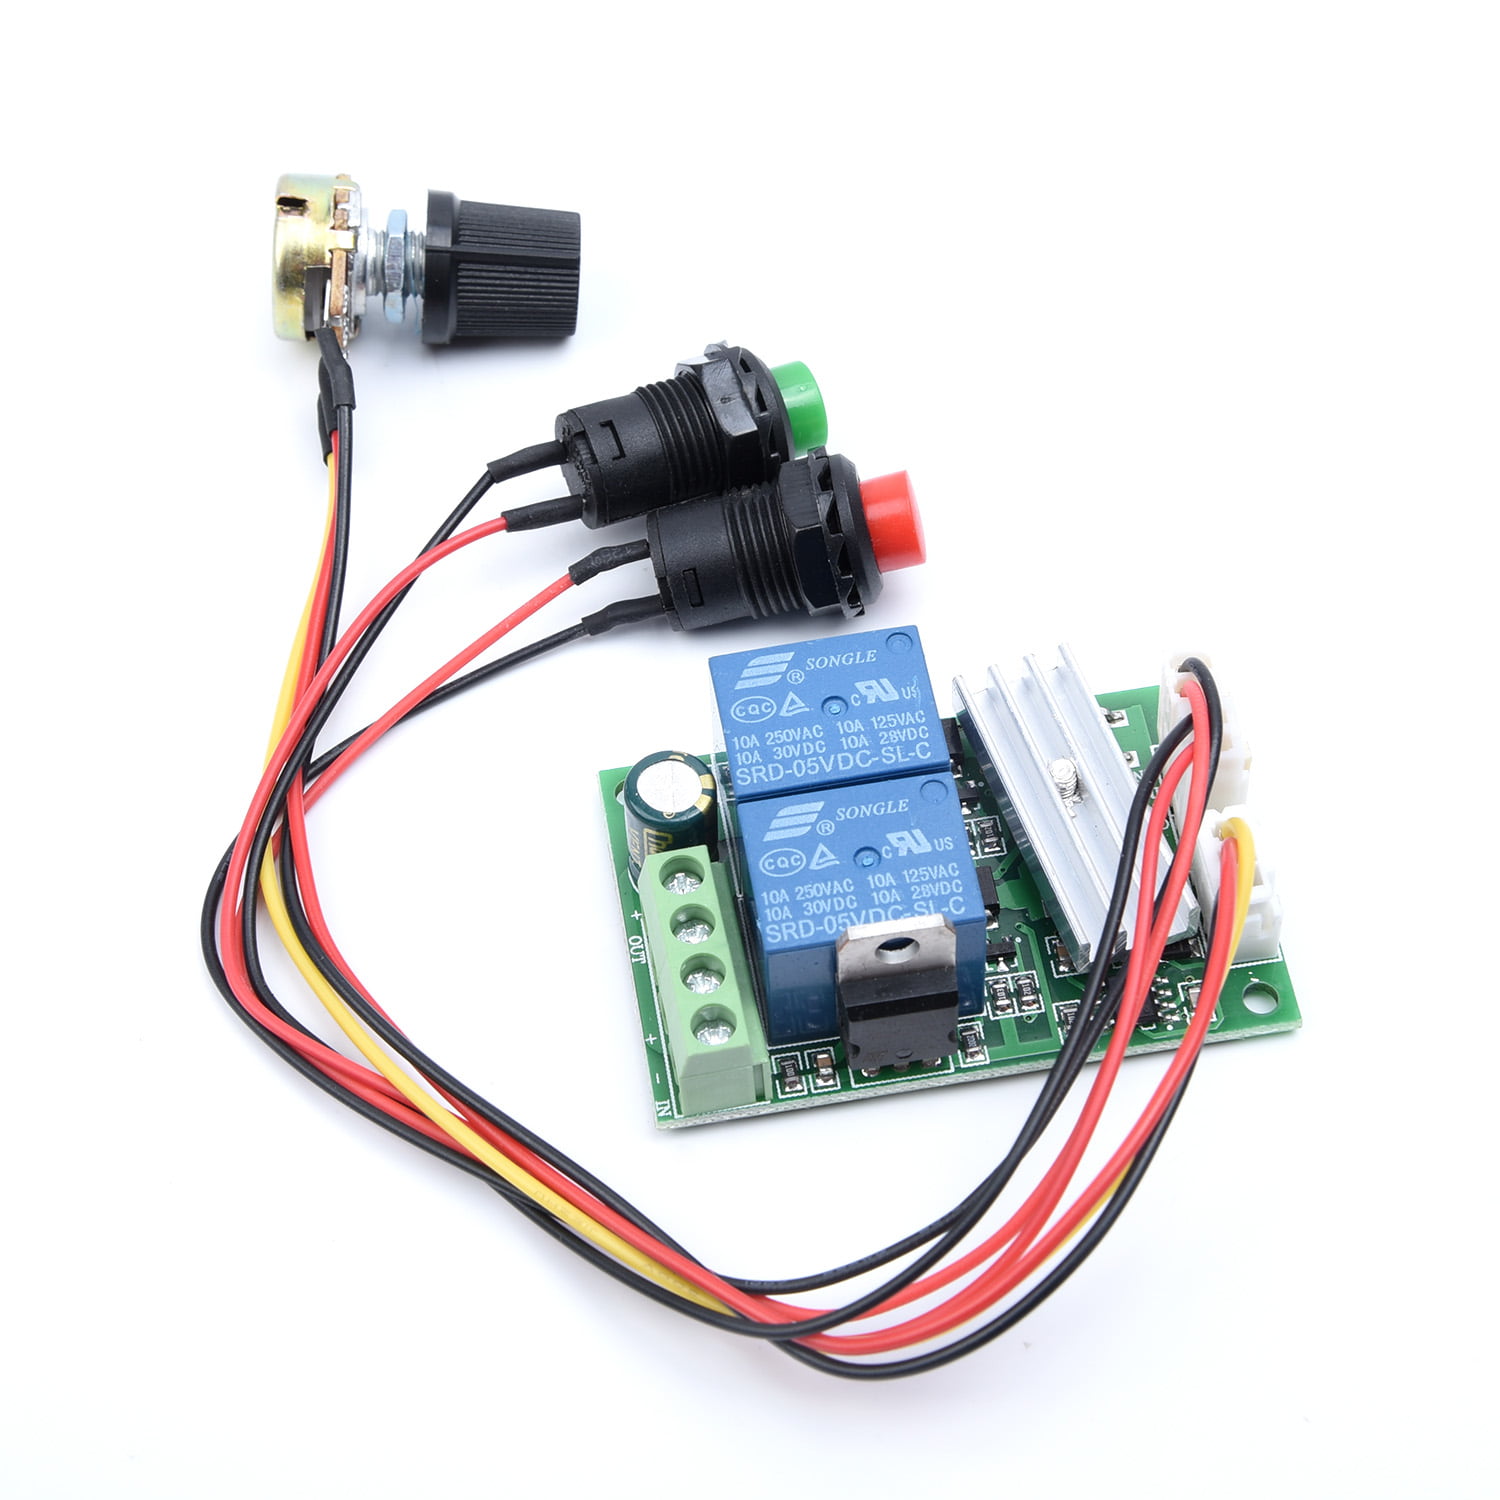 6V-24V 3A DC Motor Speed Control Controller PWM Regulator Reversible Switch 